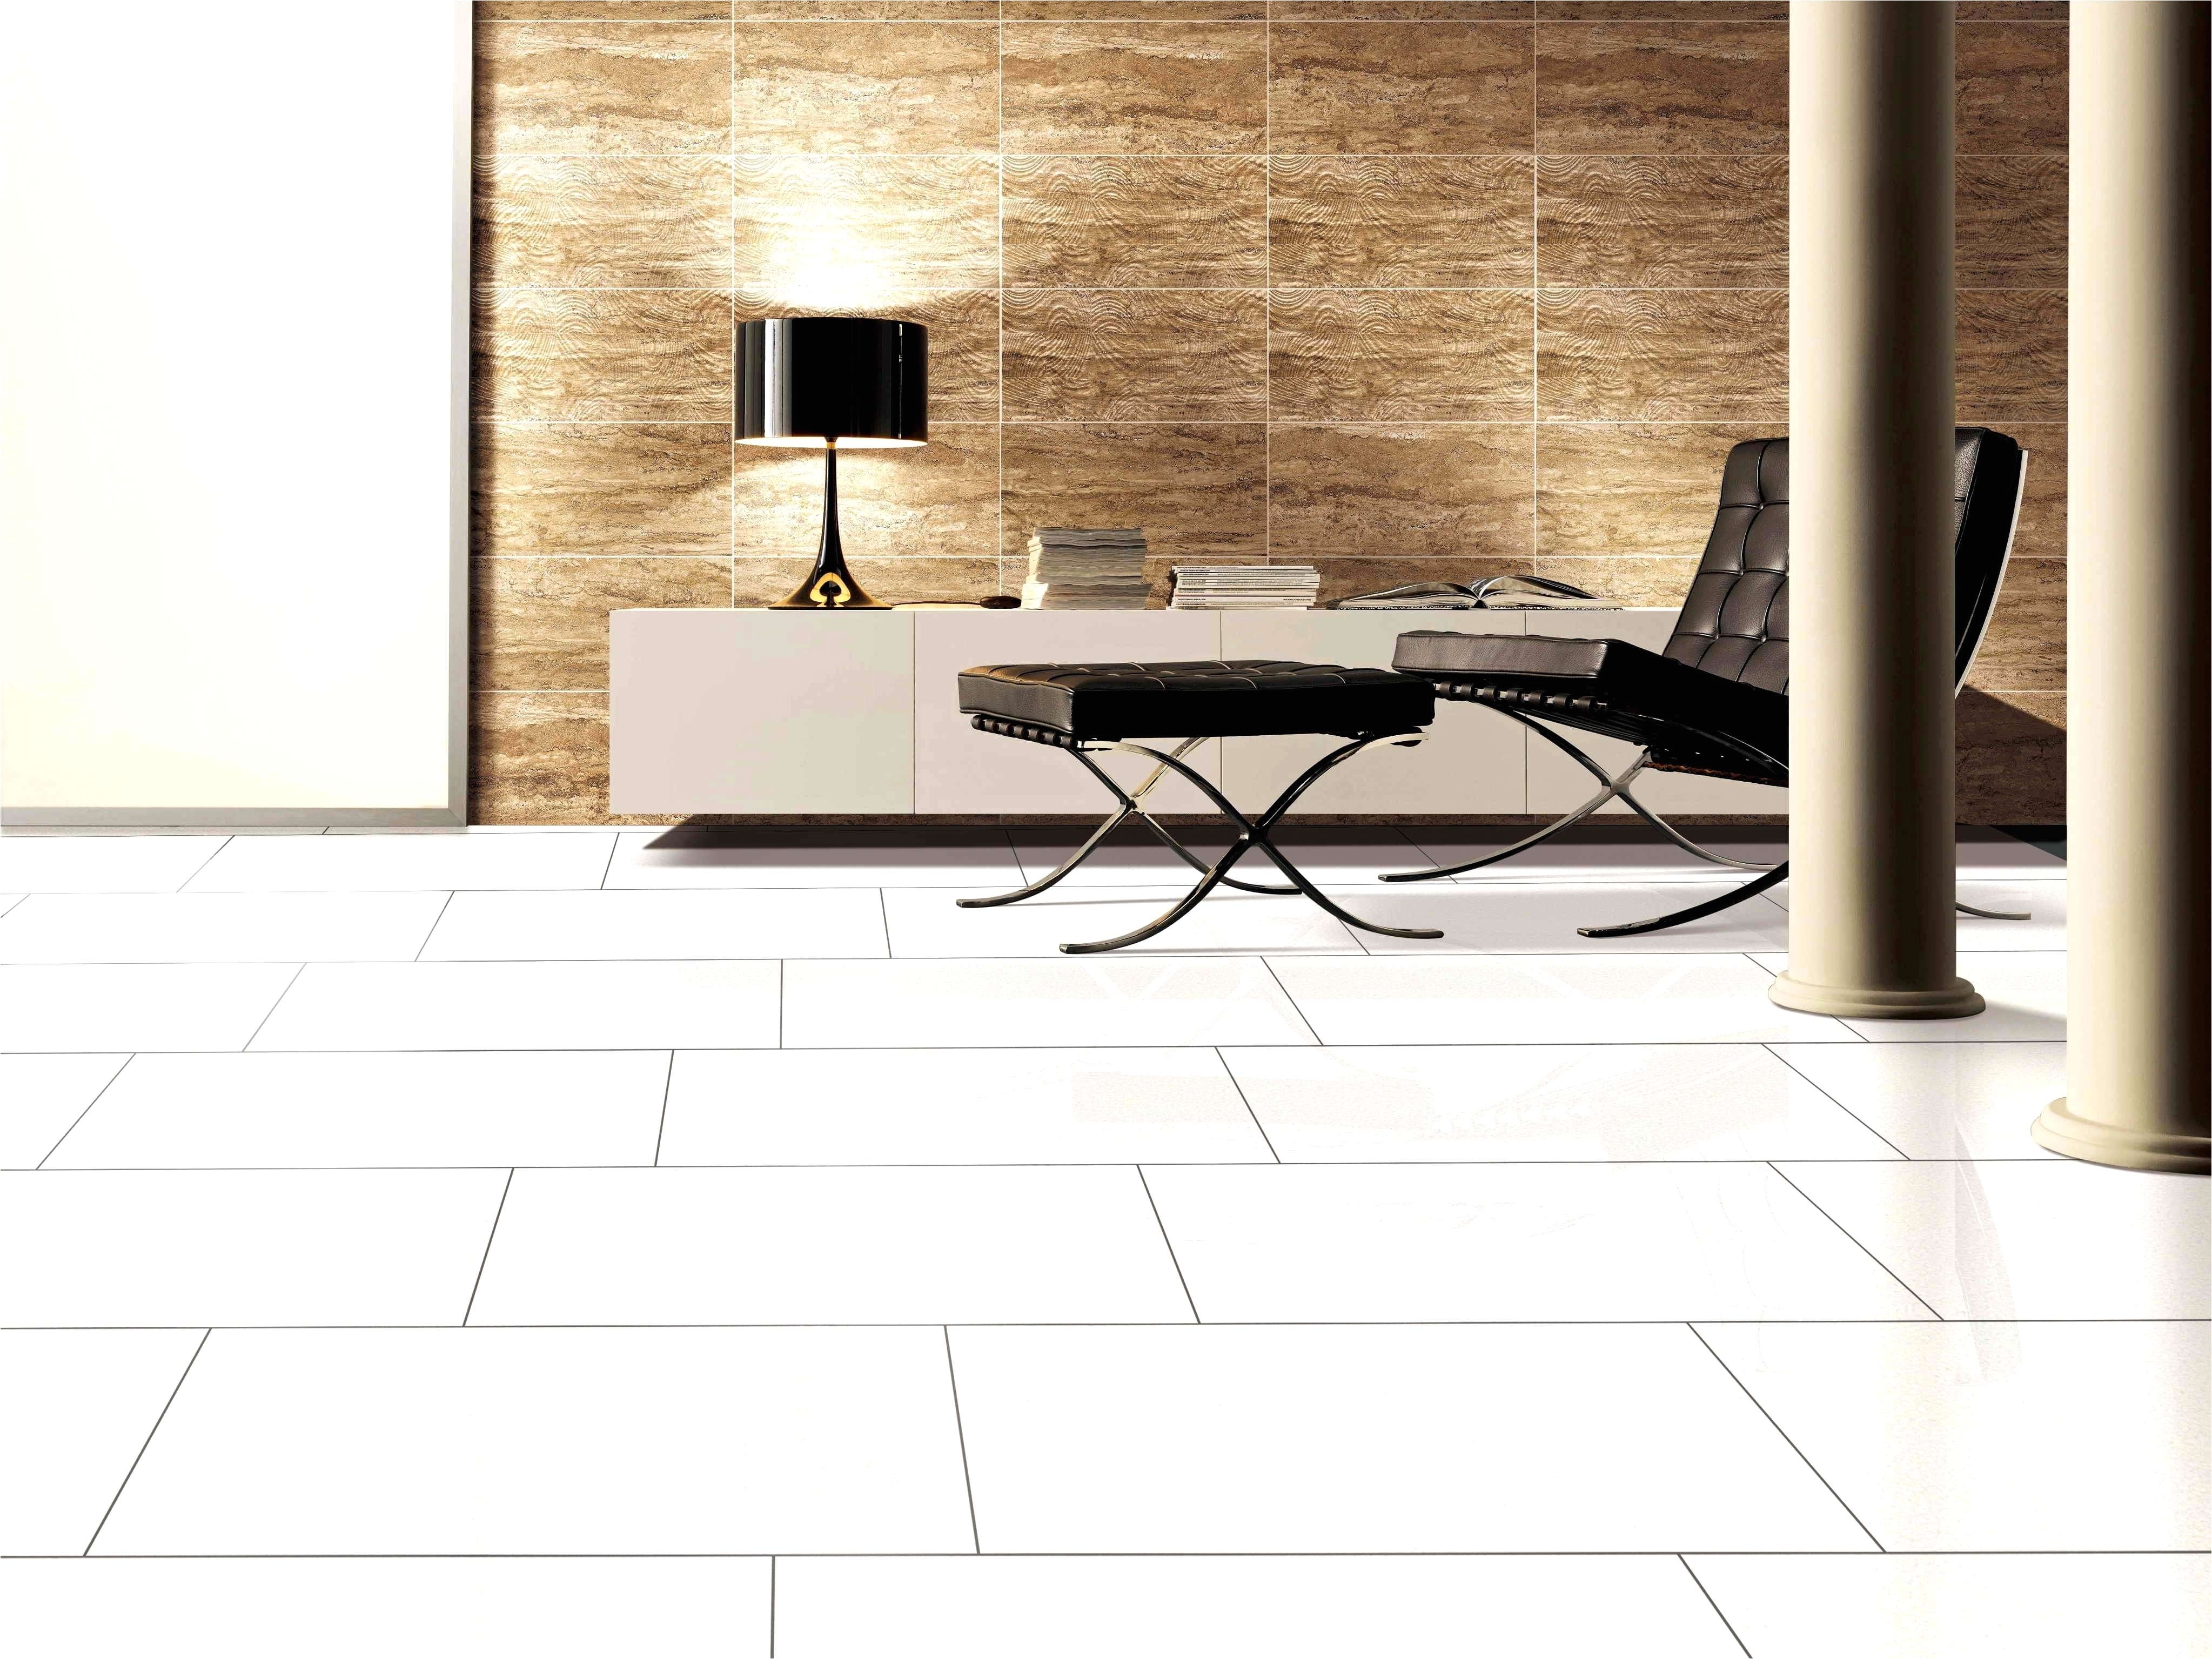 Bathroom Floor Tiles Design Refrence Unique Shower Floor Tile Ideas New Tile Floor Mosaic Bathroom 0d New